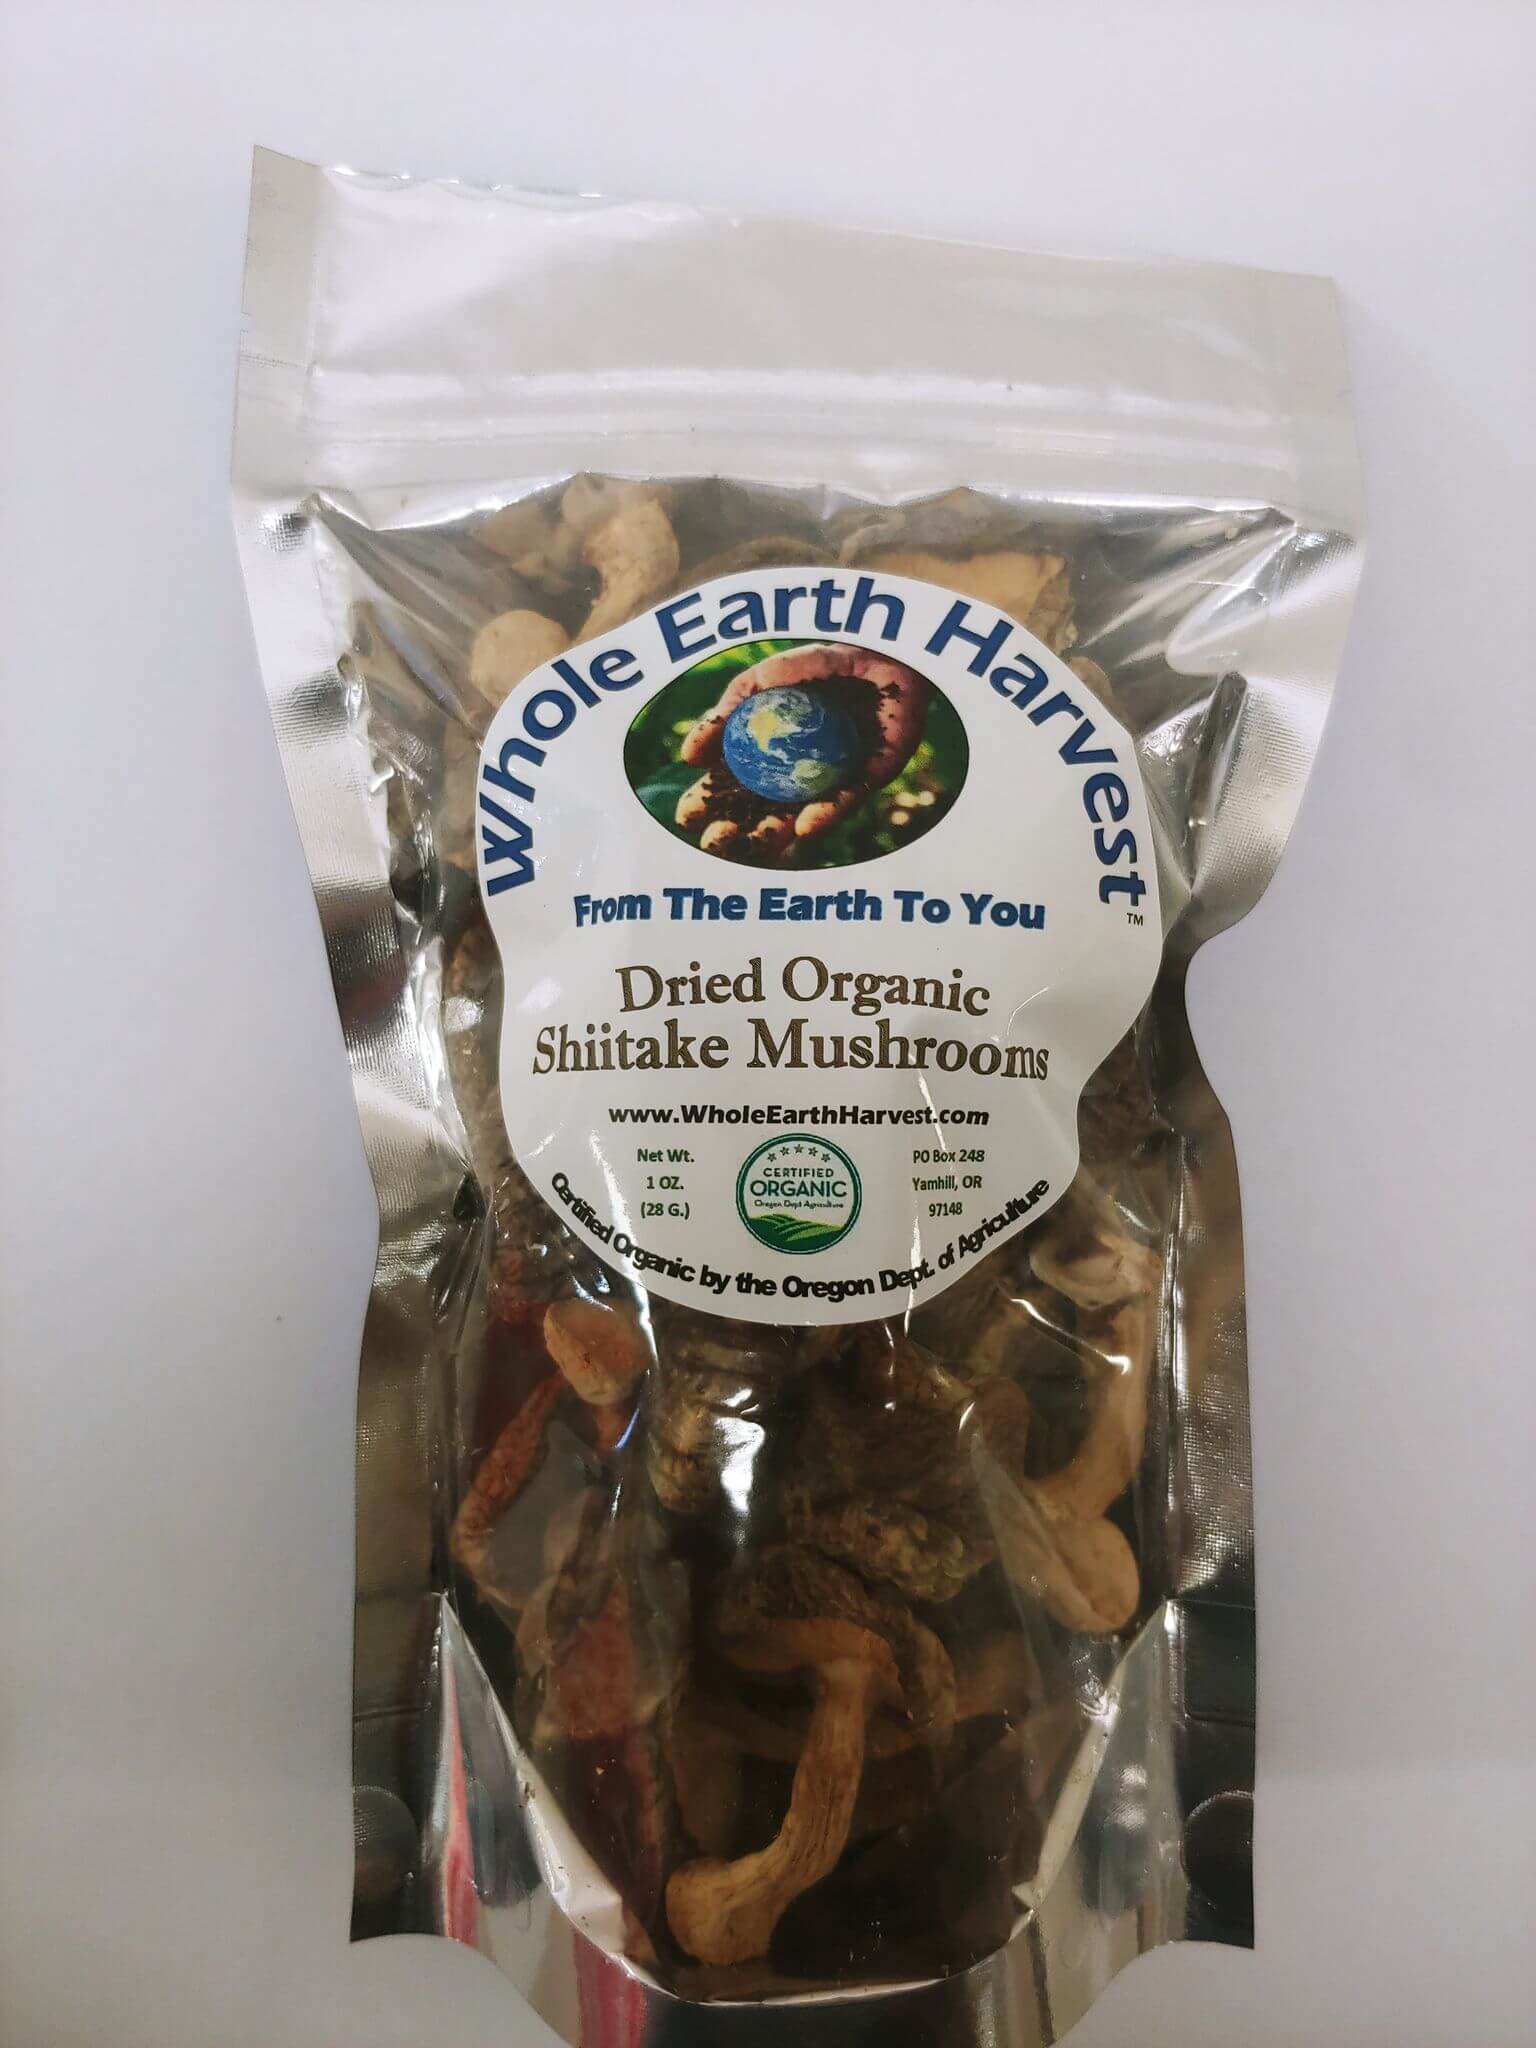 Organic Whole Shiitake Mushrooms, 1 Lb Bag by D'allesandro